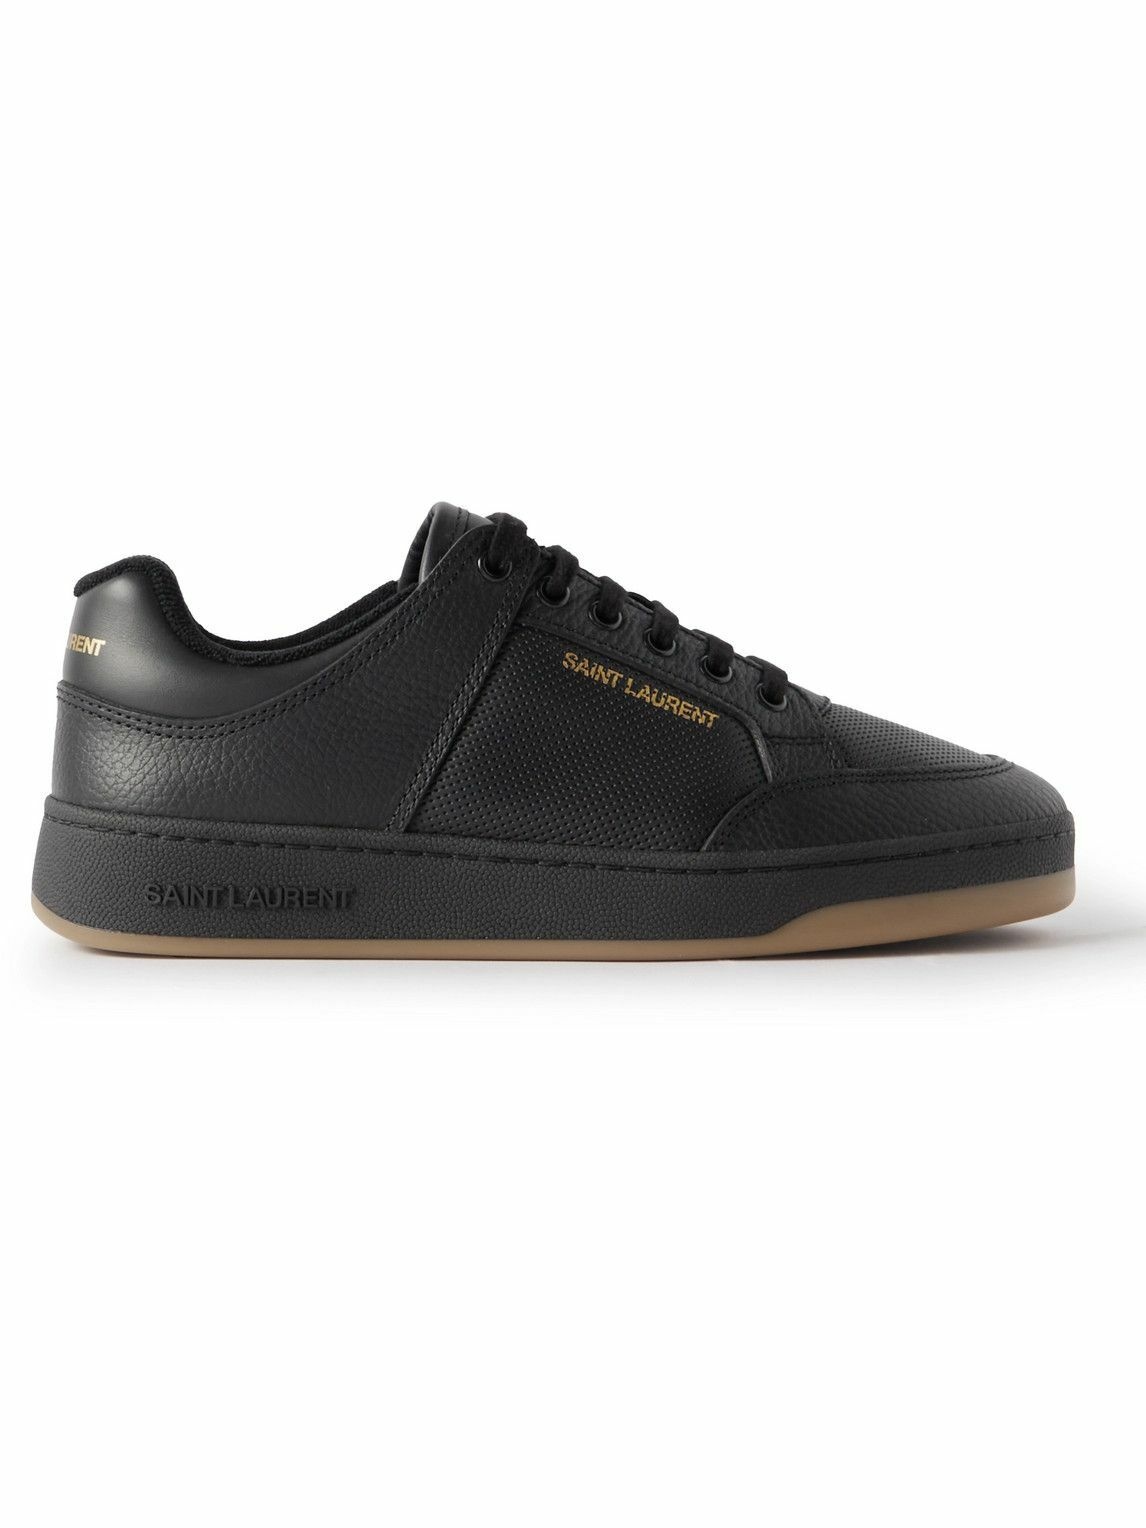 SAINT LAURENT - SL/61 Perforated Leather Sneakers - Black Saint Laurent